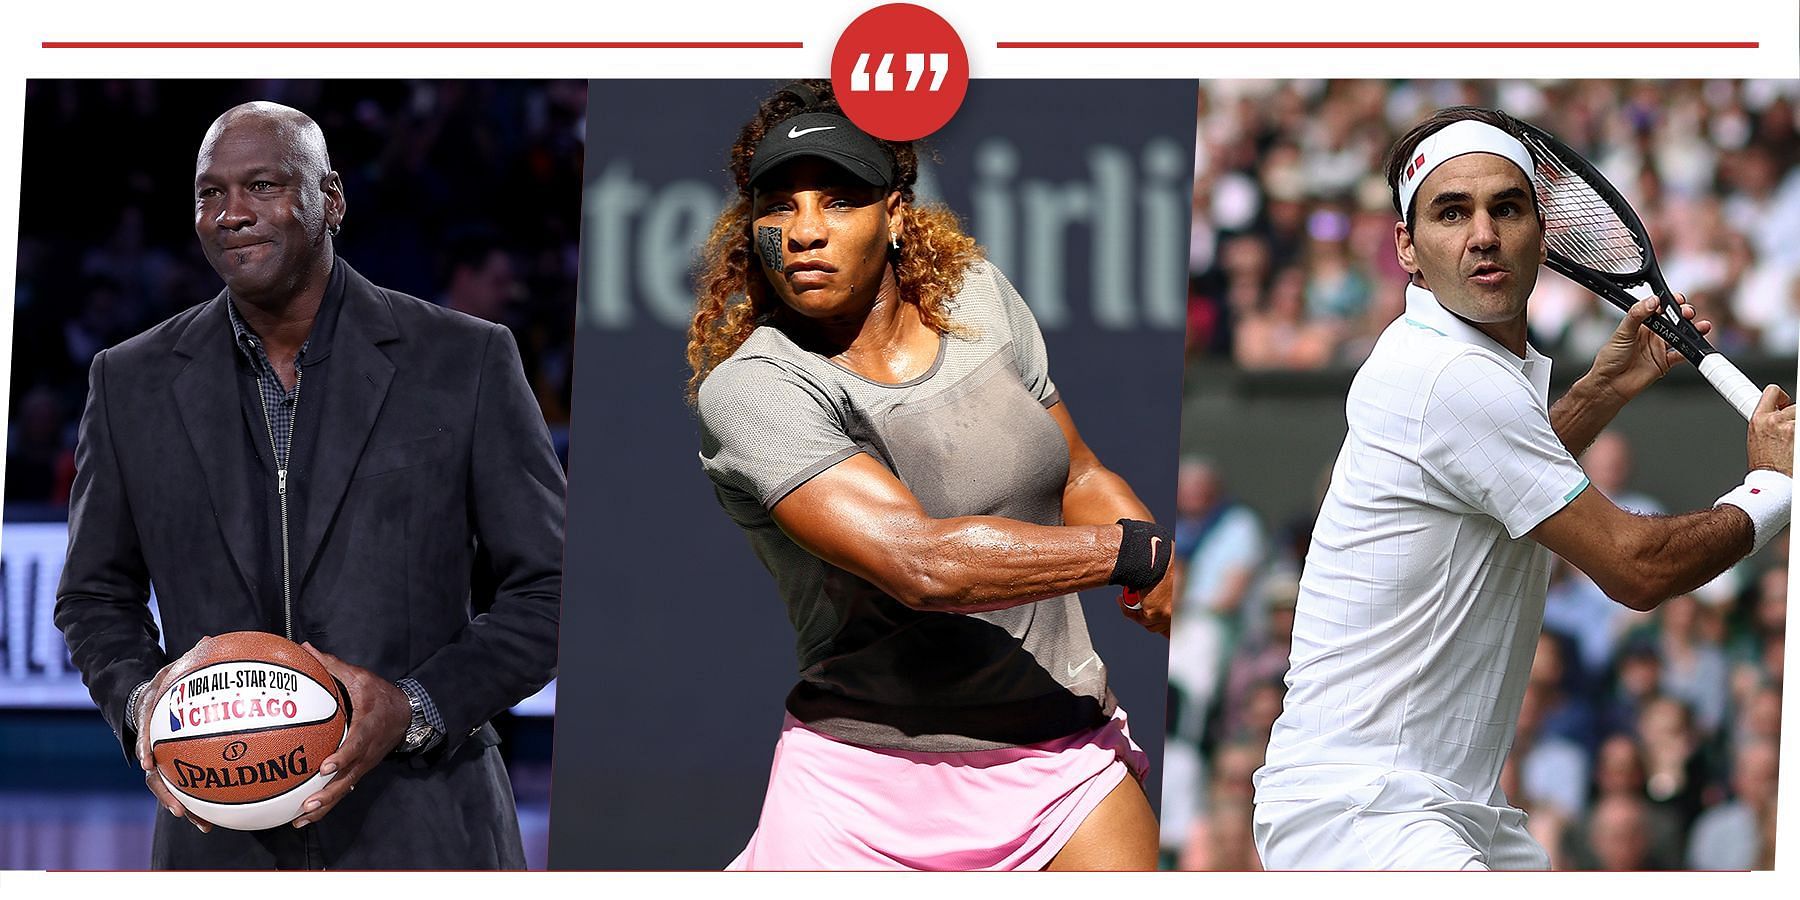 From L-R: Michael Jordan, Serena Williams and Roger Federer